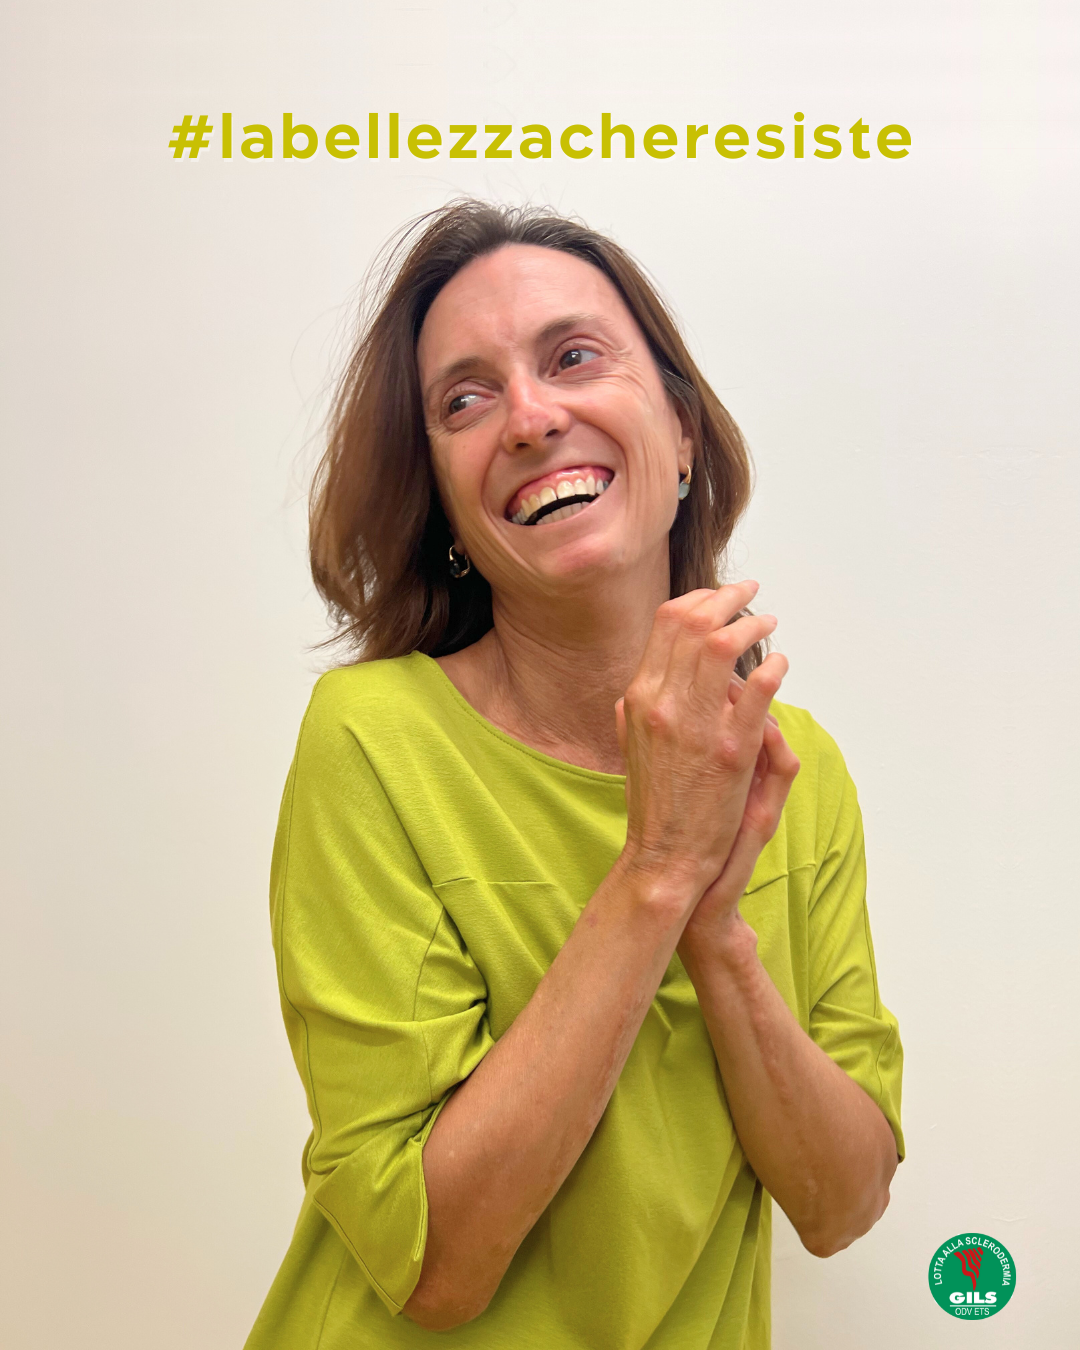 Il GILS lancia la campagna social #labellezzacheresiste